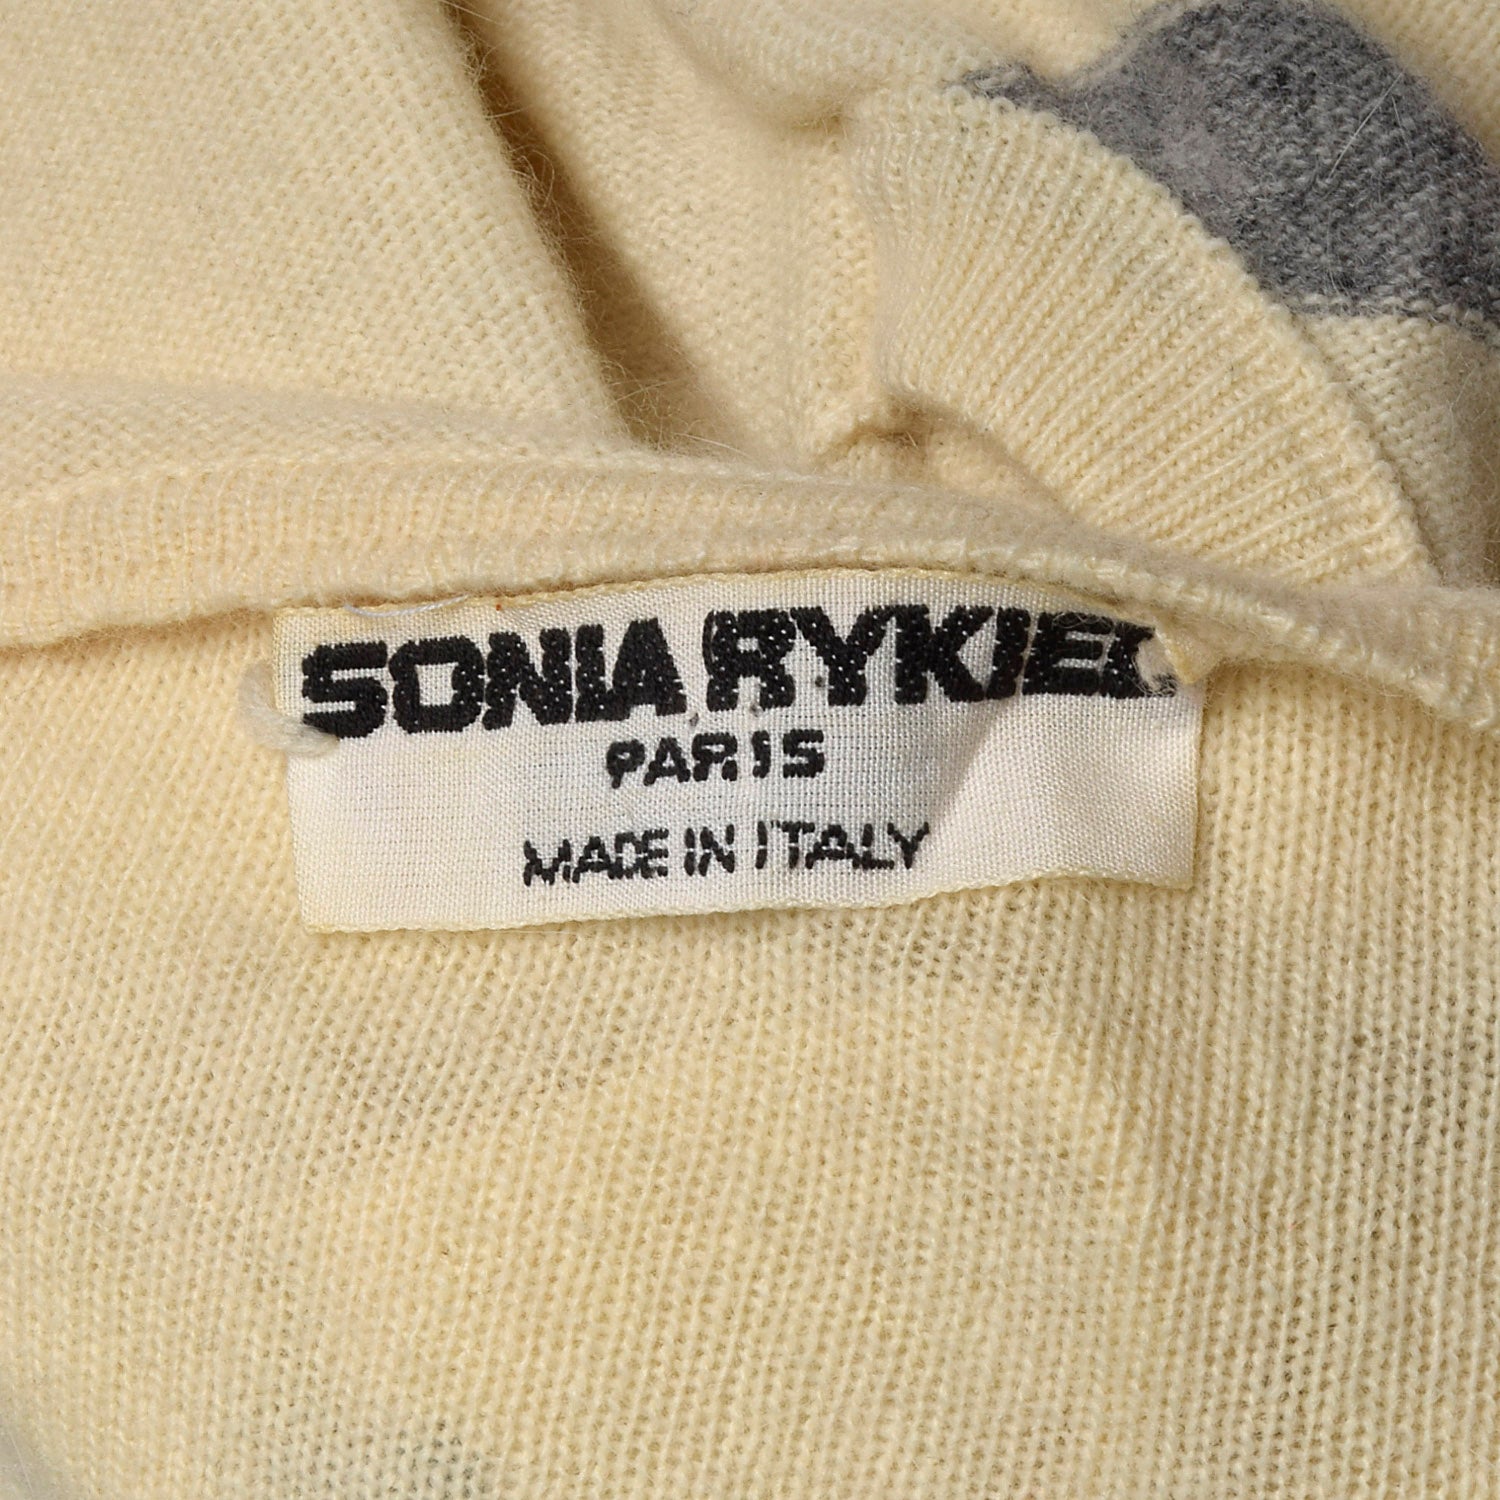 Medium Sonia Rykiel 1980s Cream Striped Tunic Sweater